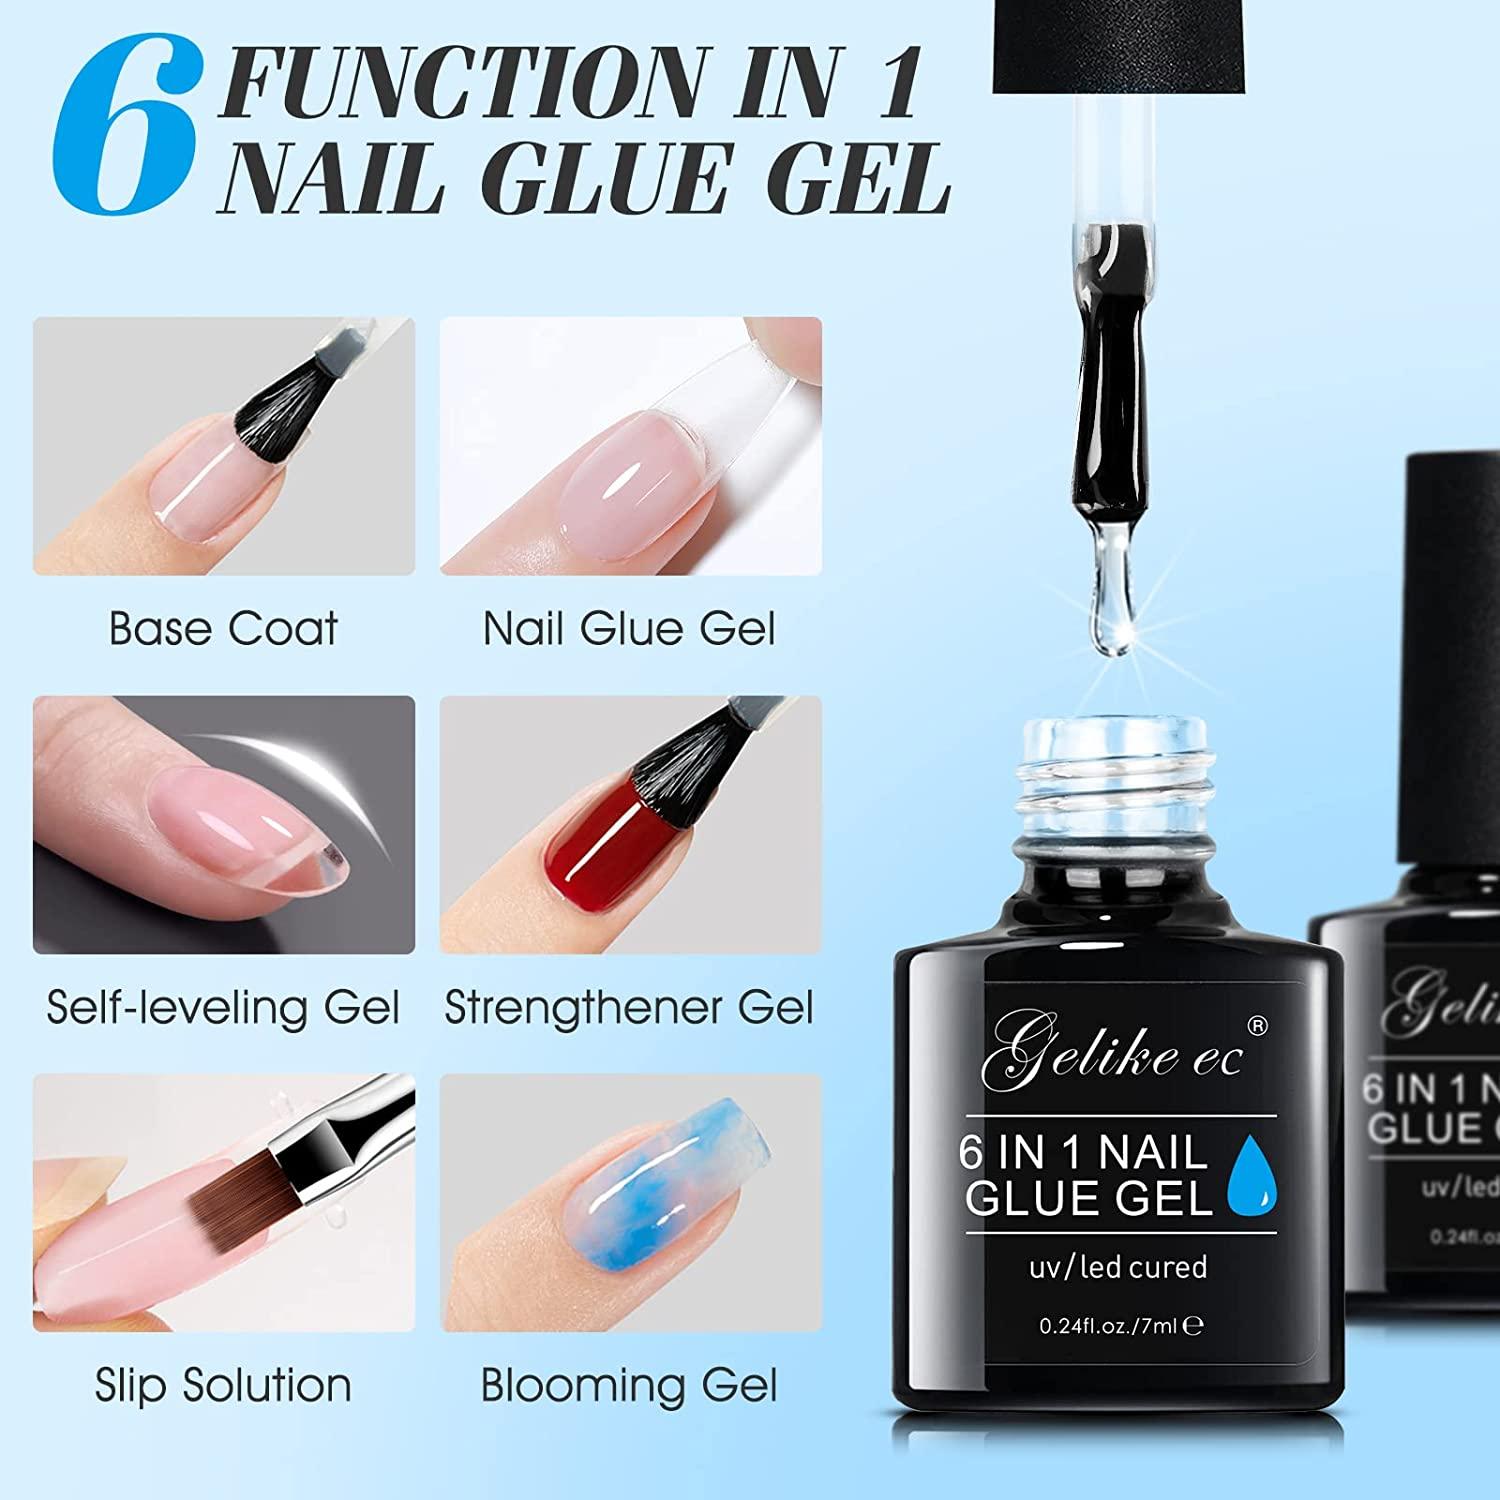 Nailart Glue Gel | Saida Nails